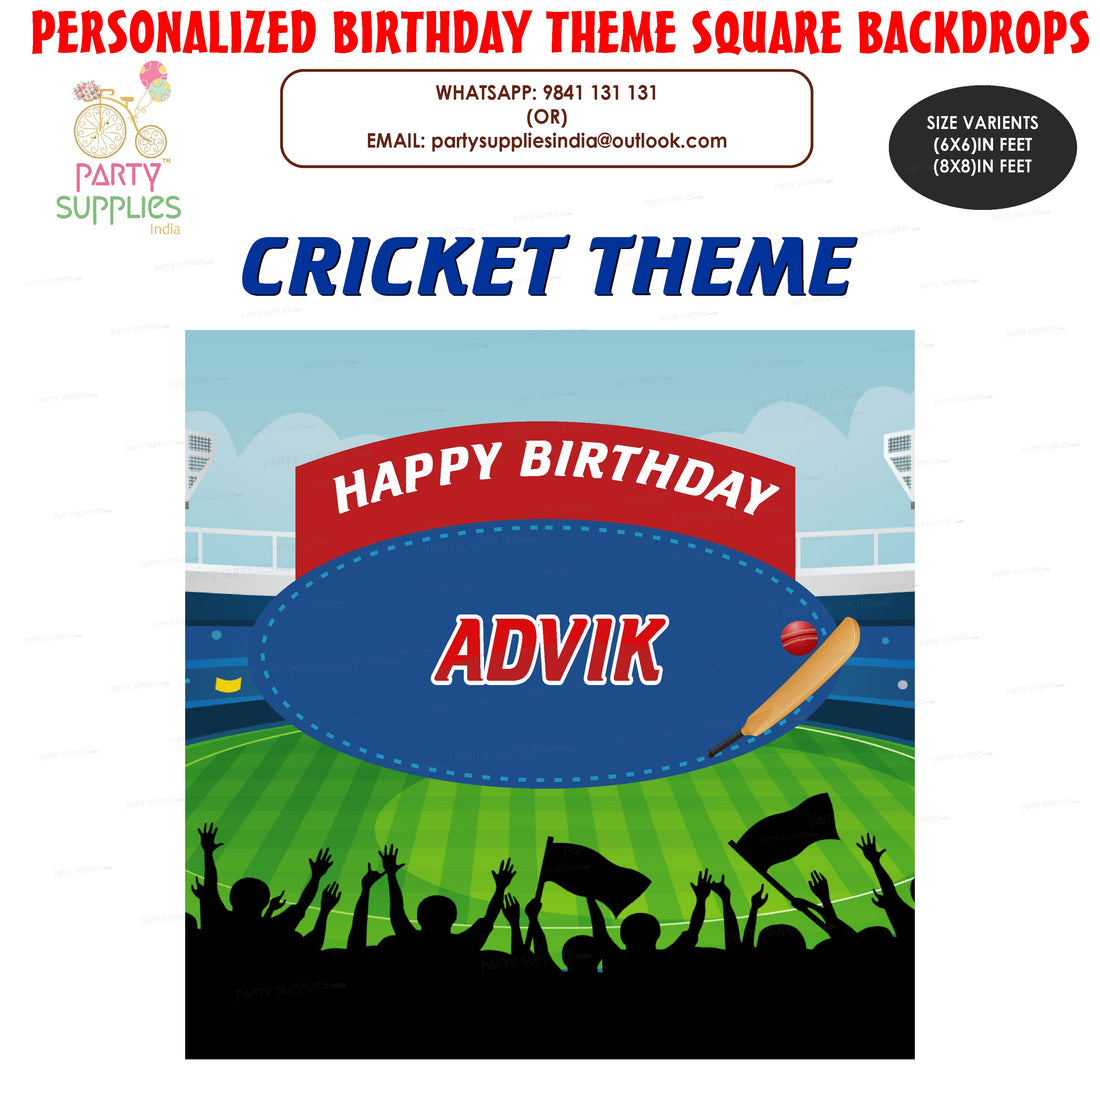 PSI Cricket Theme Customized Square Backdrop